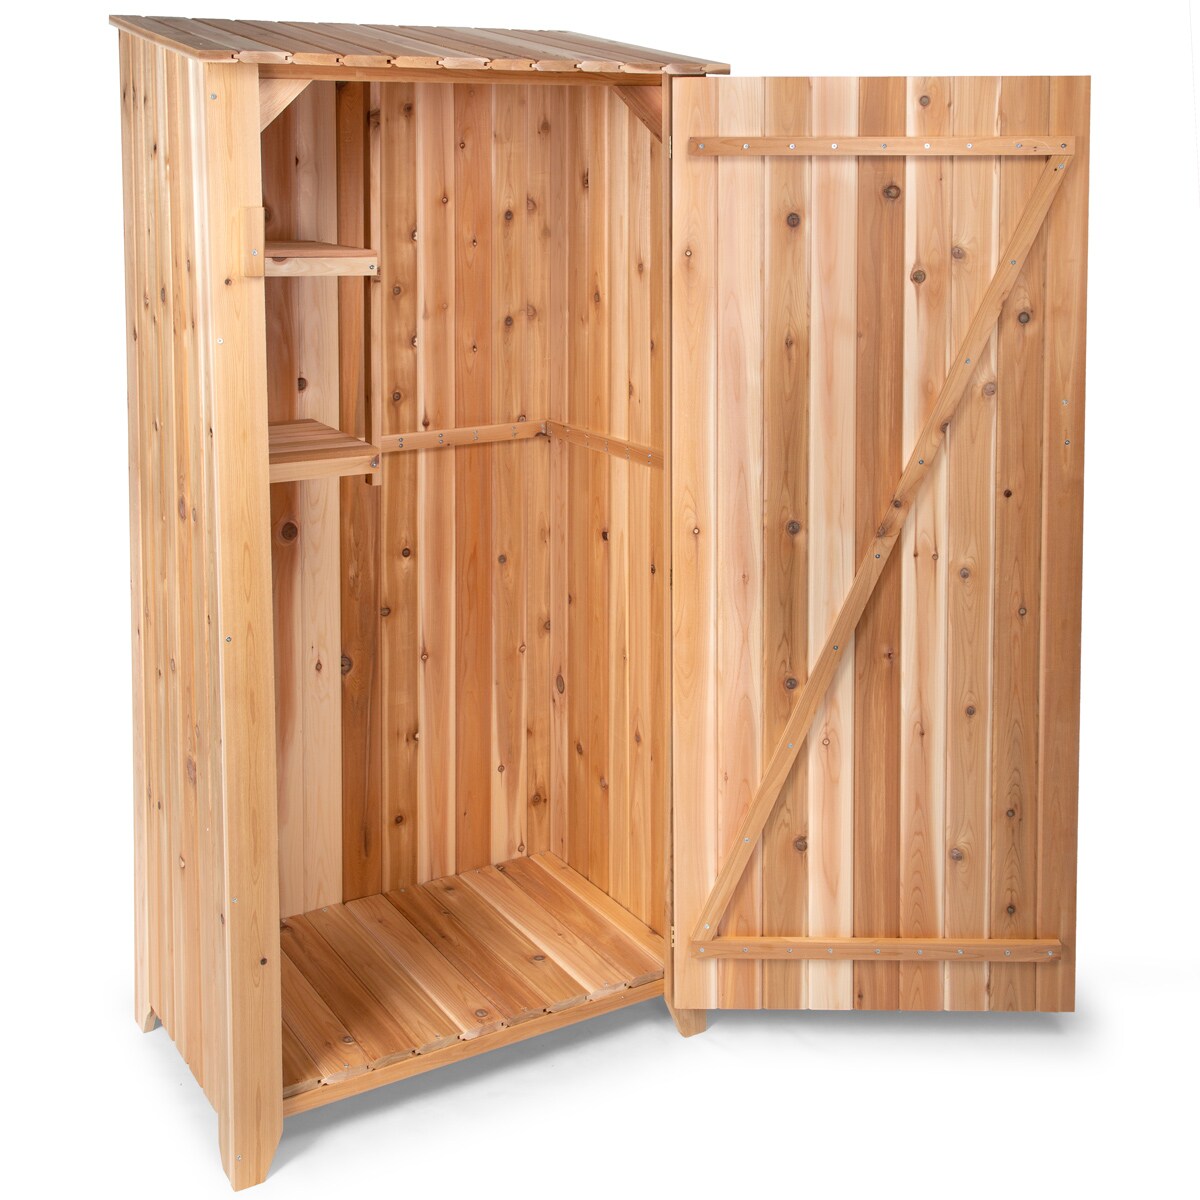 Water Softener Timber Outside Cabinet Kit 